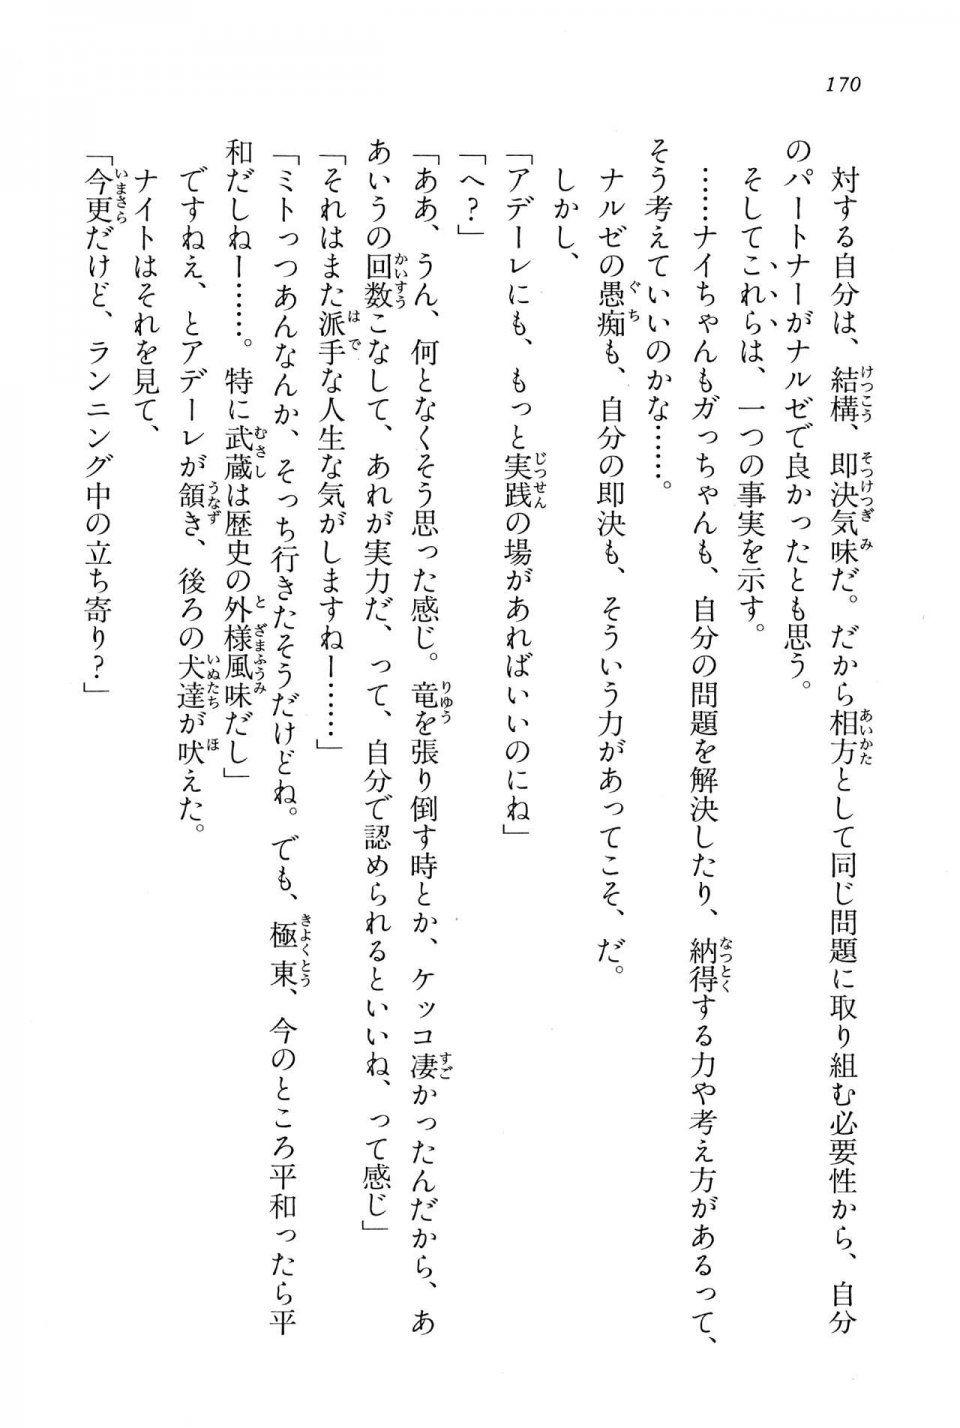 Kyoukai Senjou no Horizon BD Special Mininovel Vol 6(3B) - Photo #174